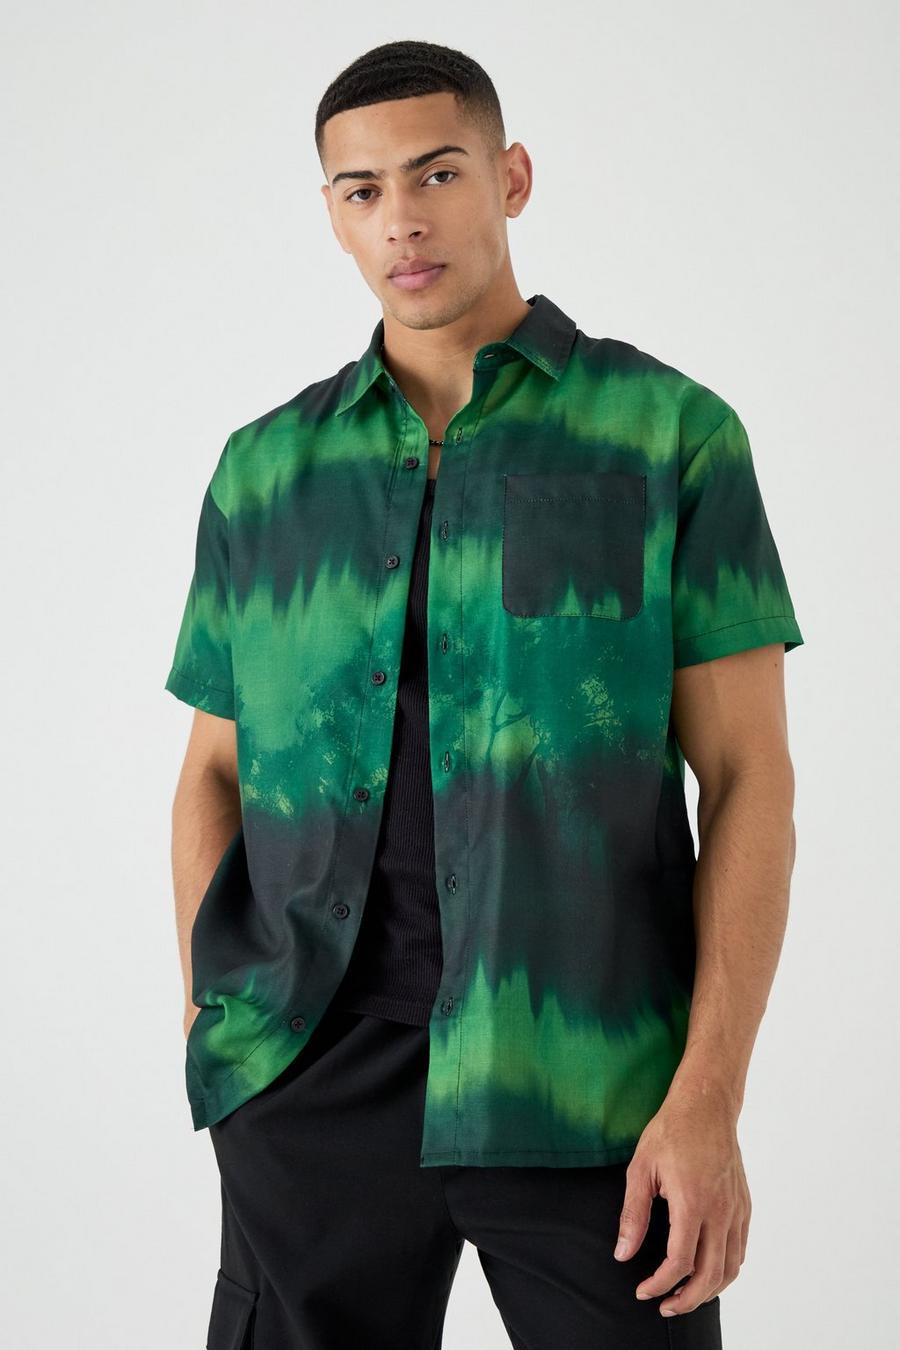 Green Short Sleeve Oversized Ombre Slub Shirt